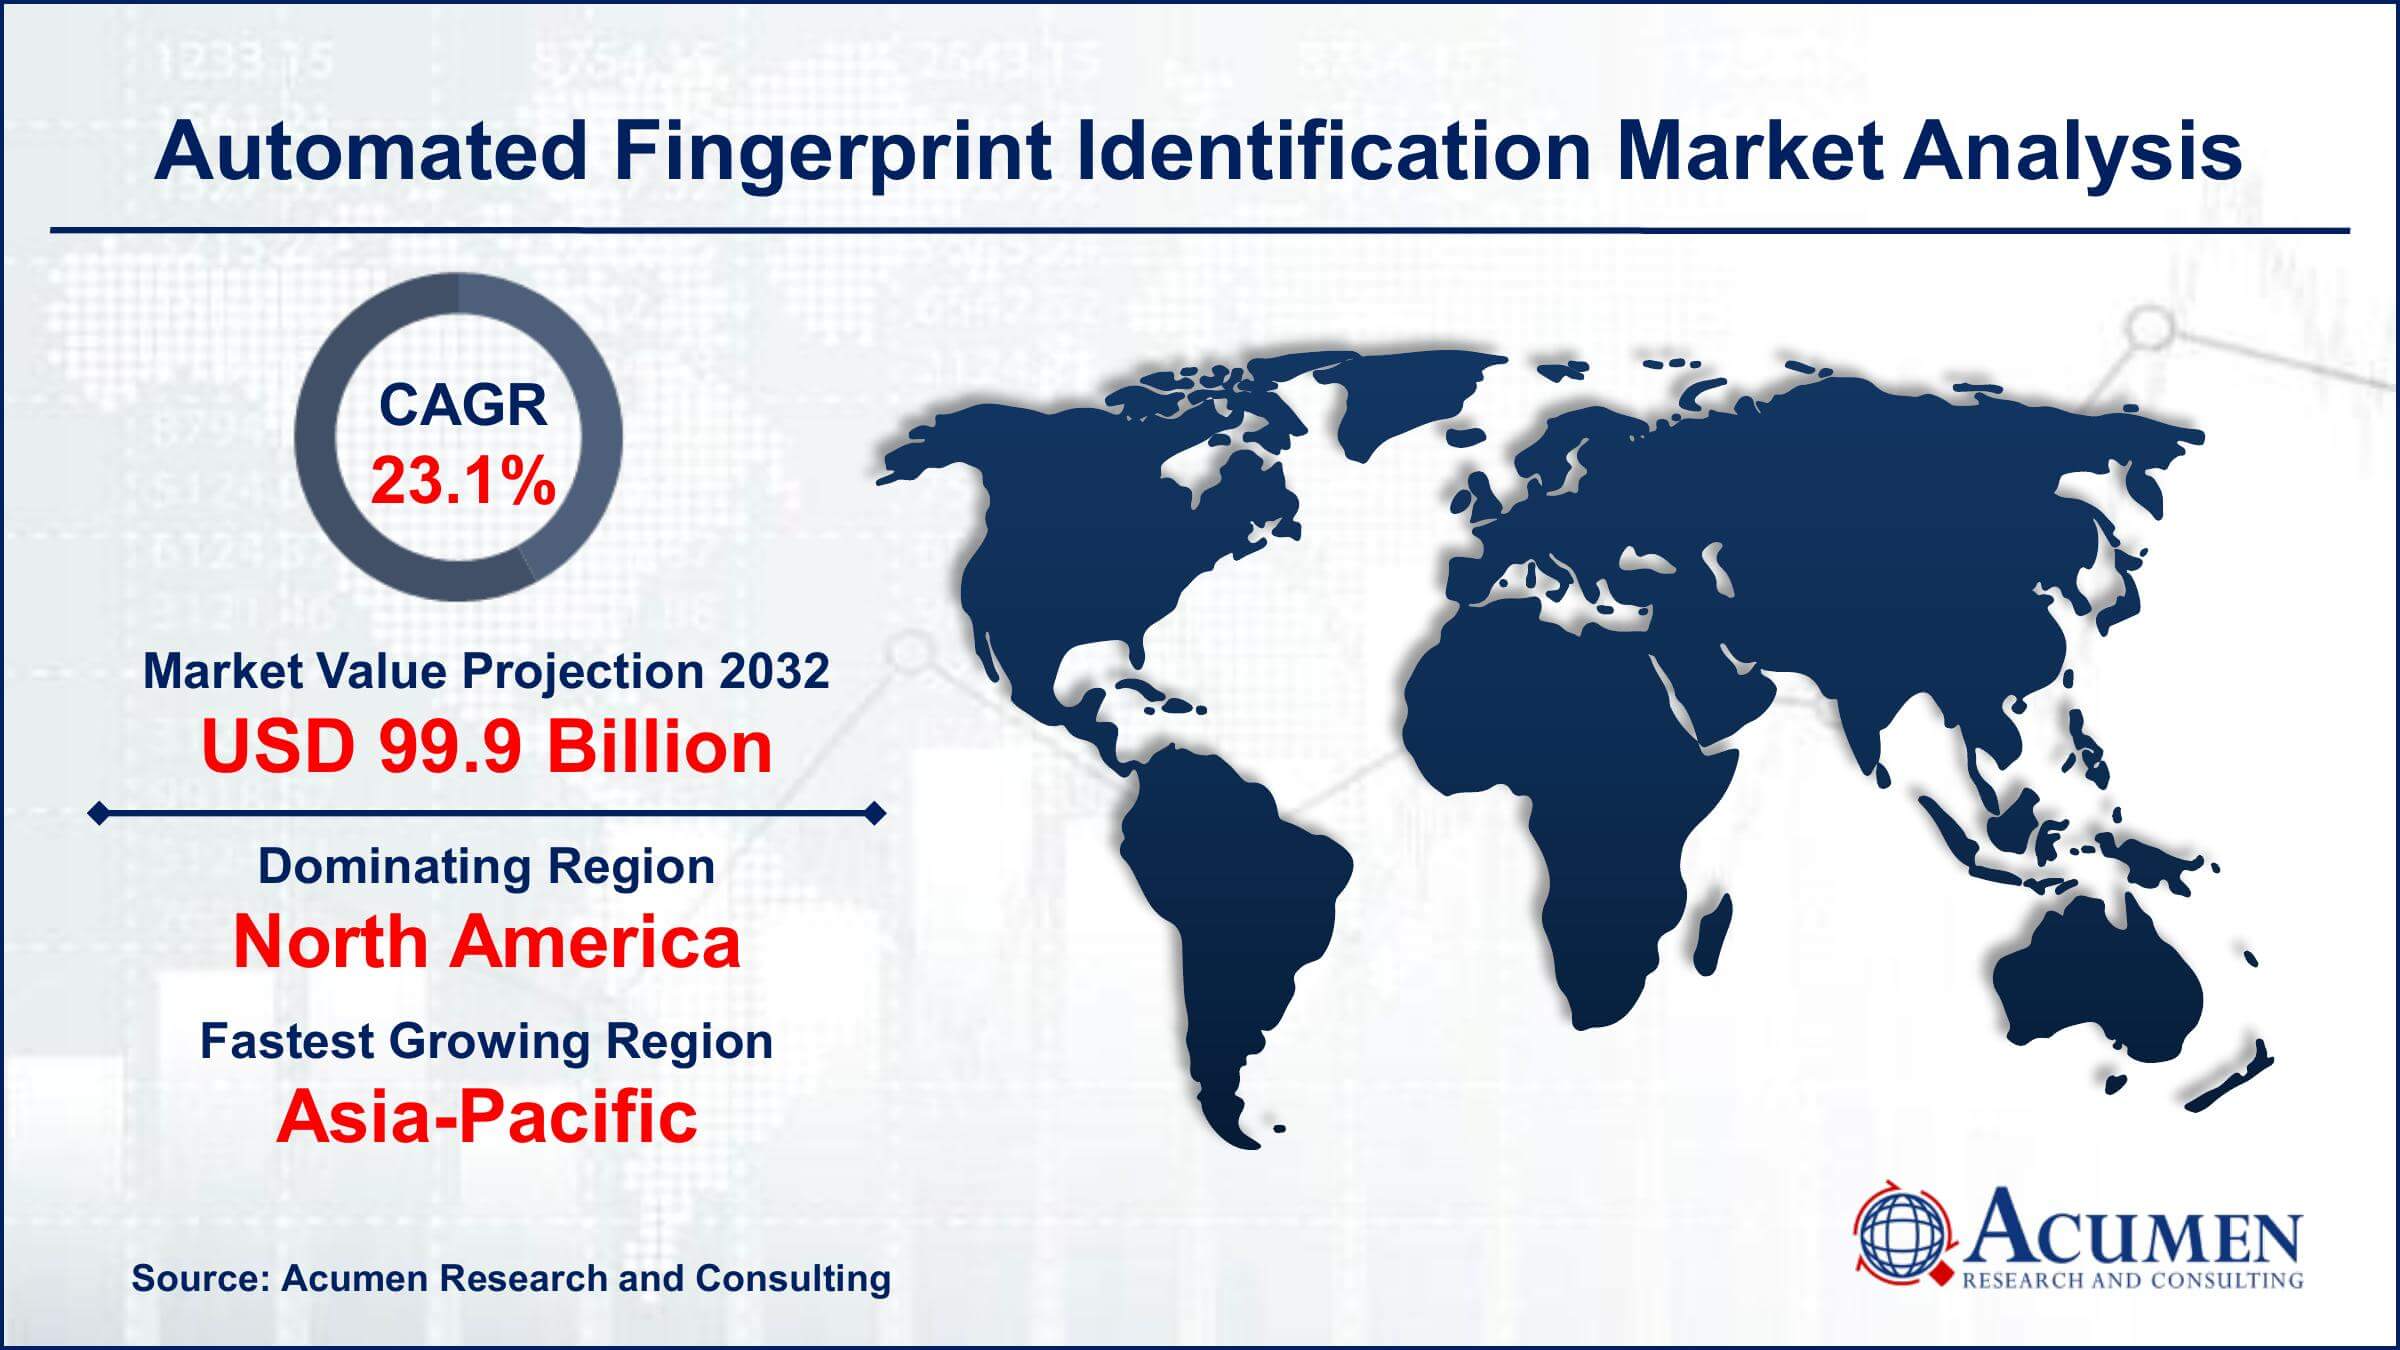 Global Automated Fingerprint Identification Market Trends